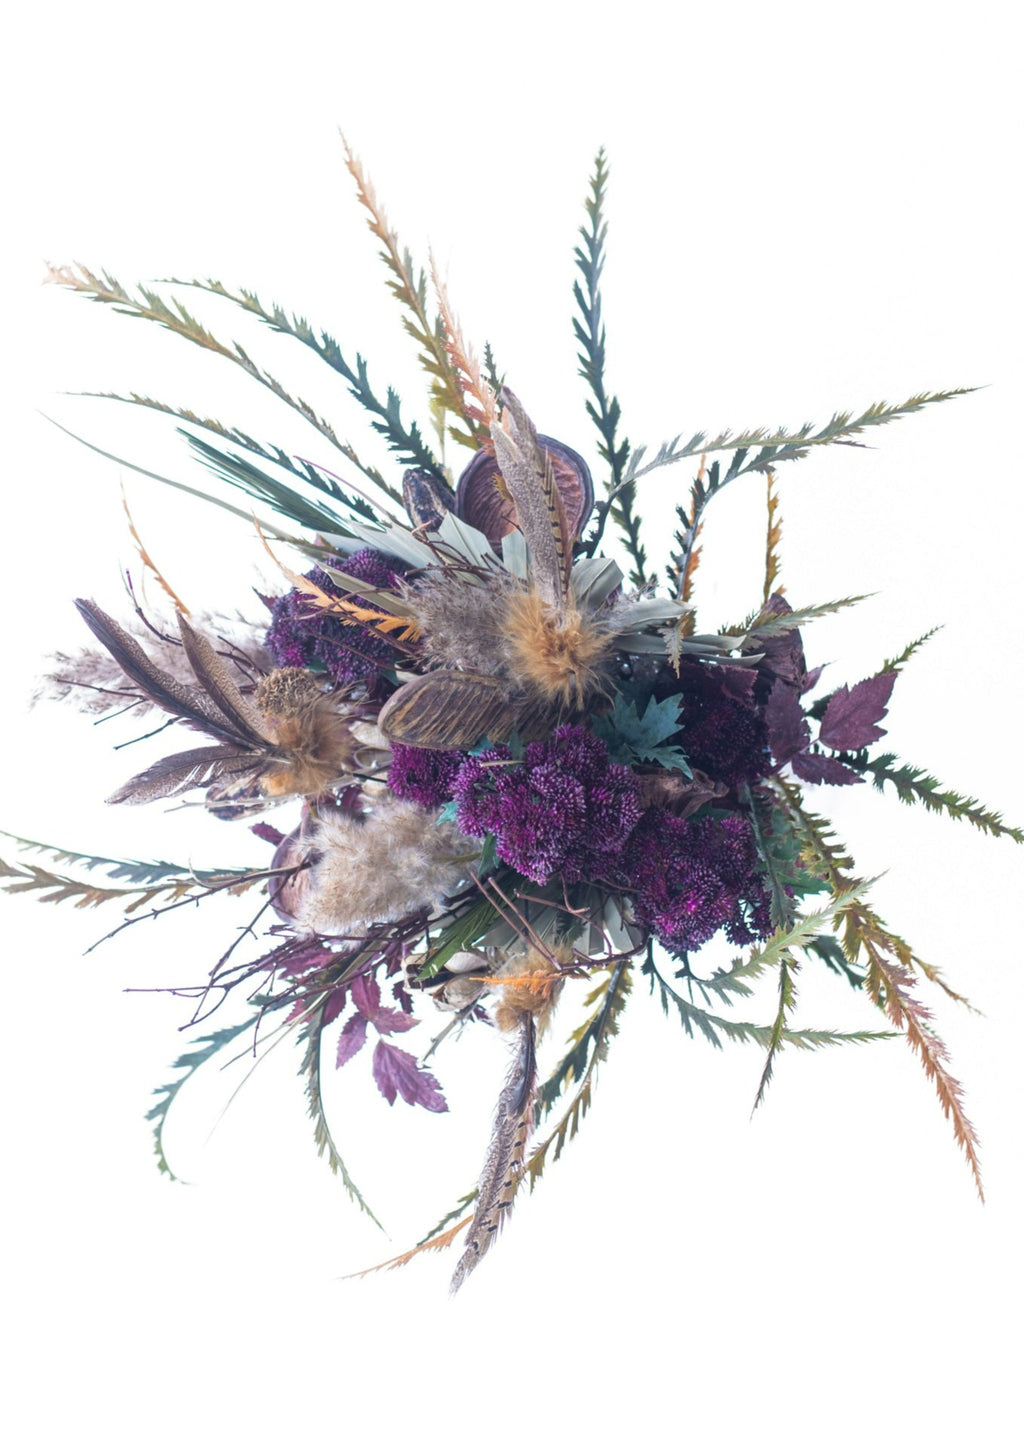 Diamond Flower Bouquet – Tina Leix Floral, Wreath & Home Co.